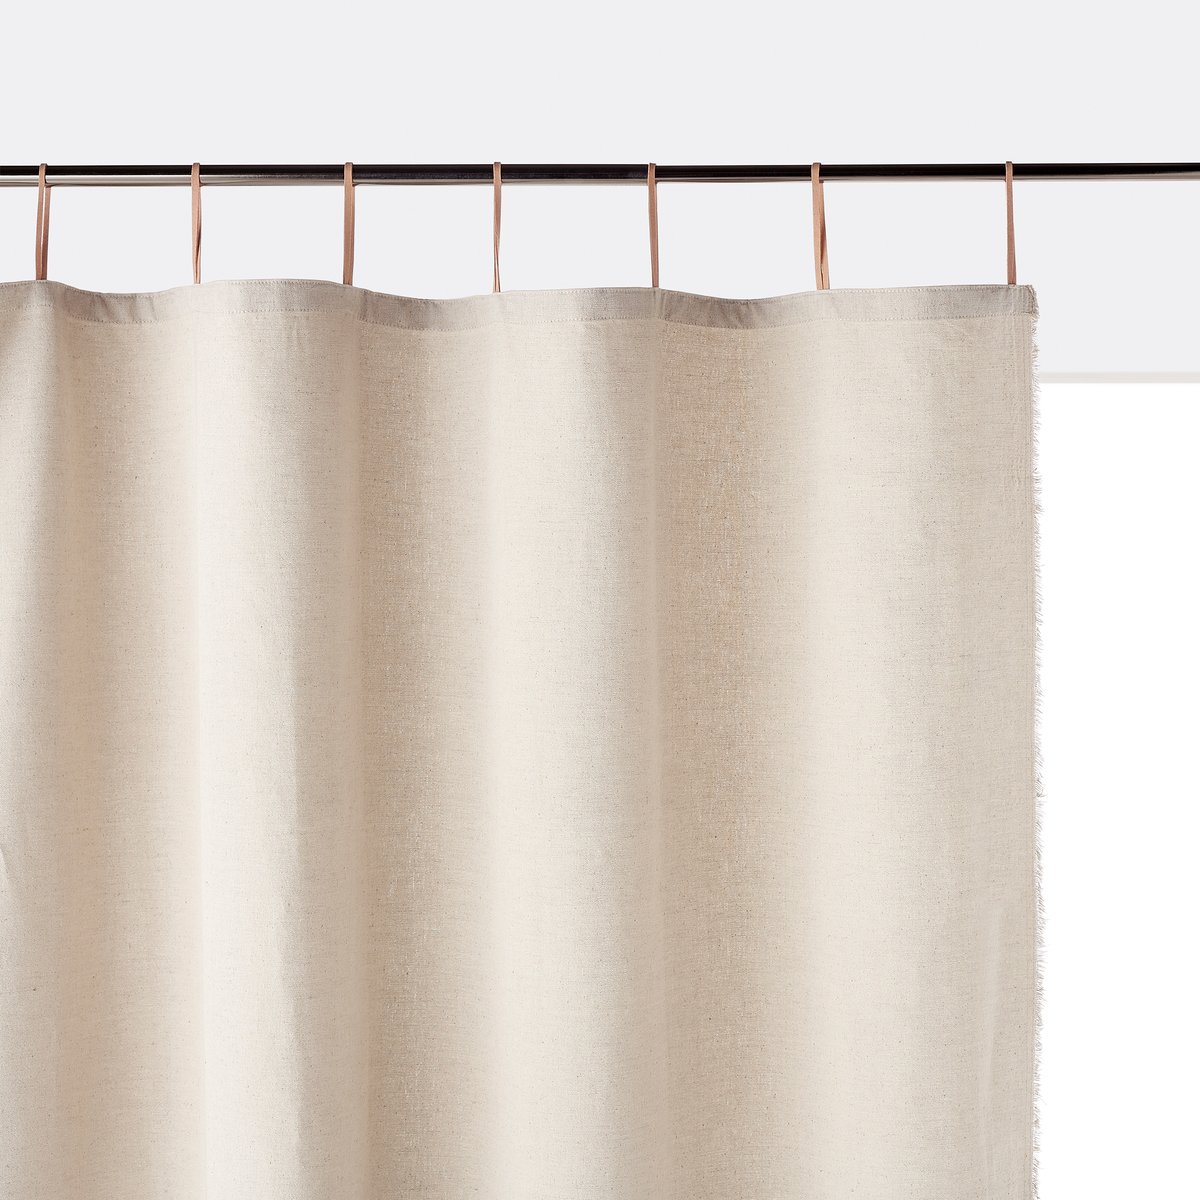 Image of Bello Fringed Cotton/Linen Single Curtain